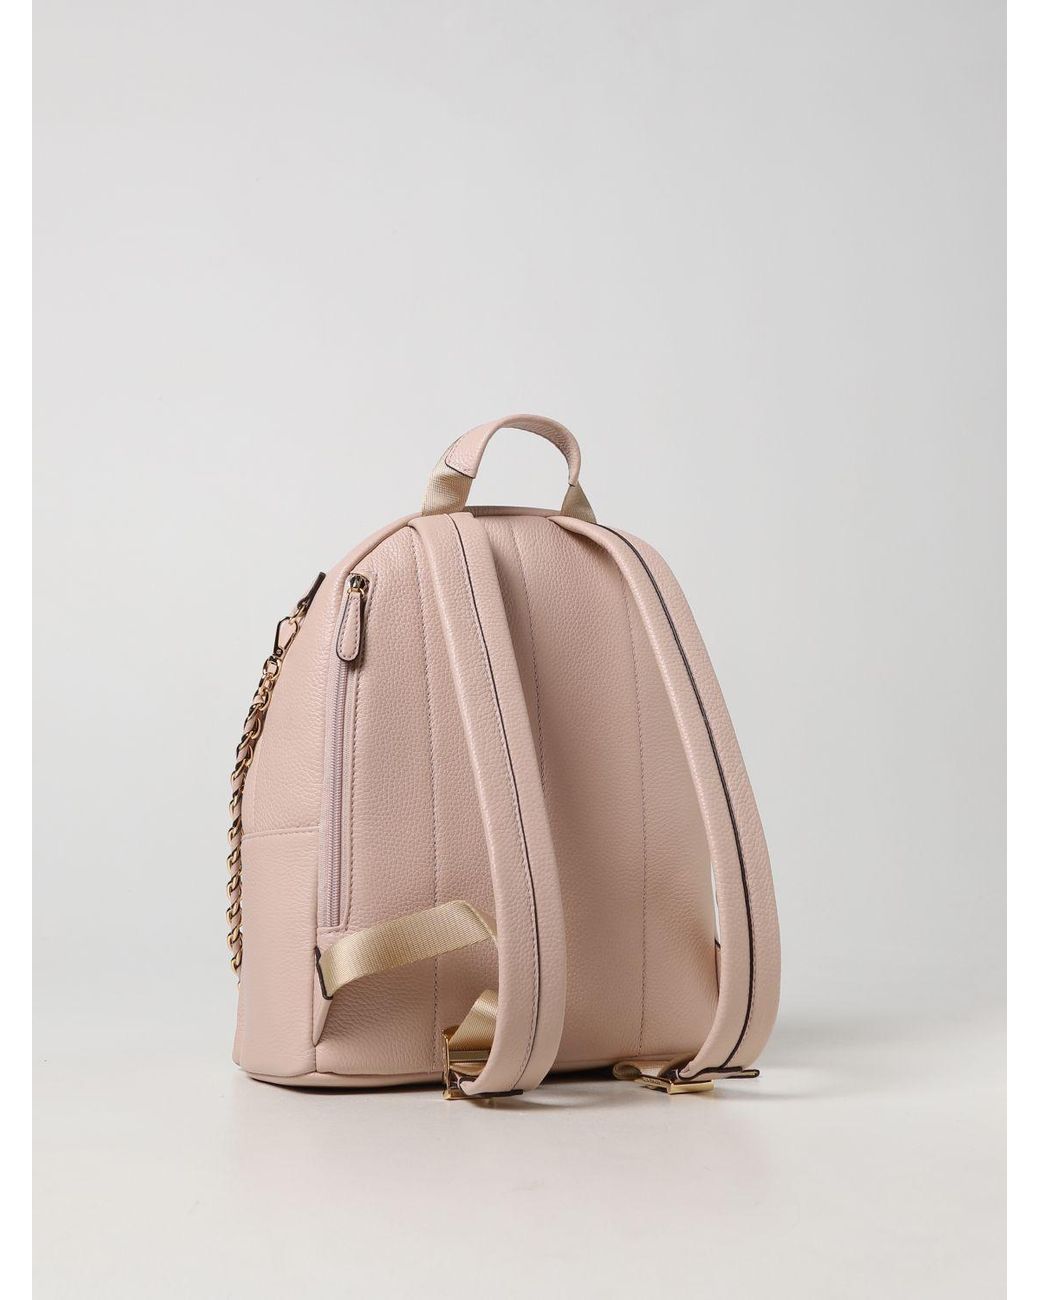 Michael Kors Backpack in Pink | Lyst